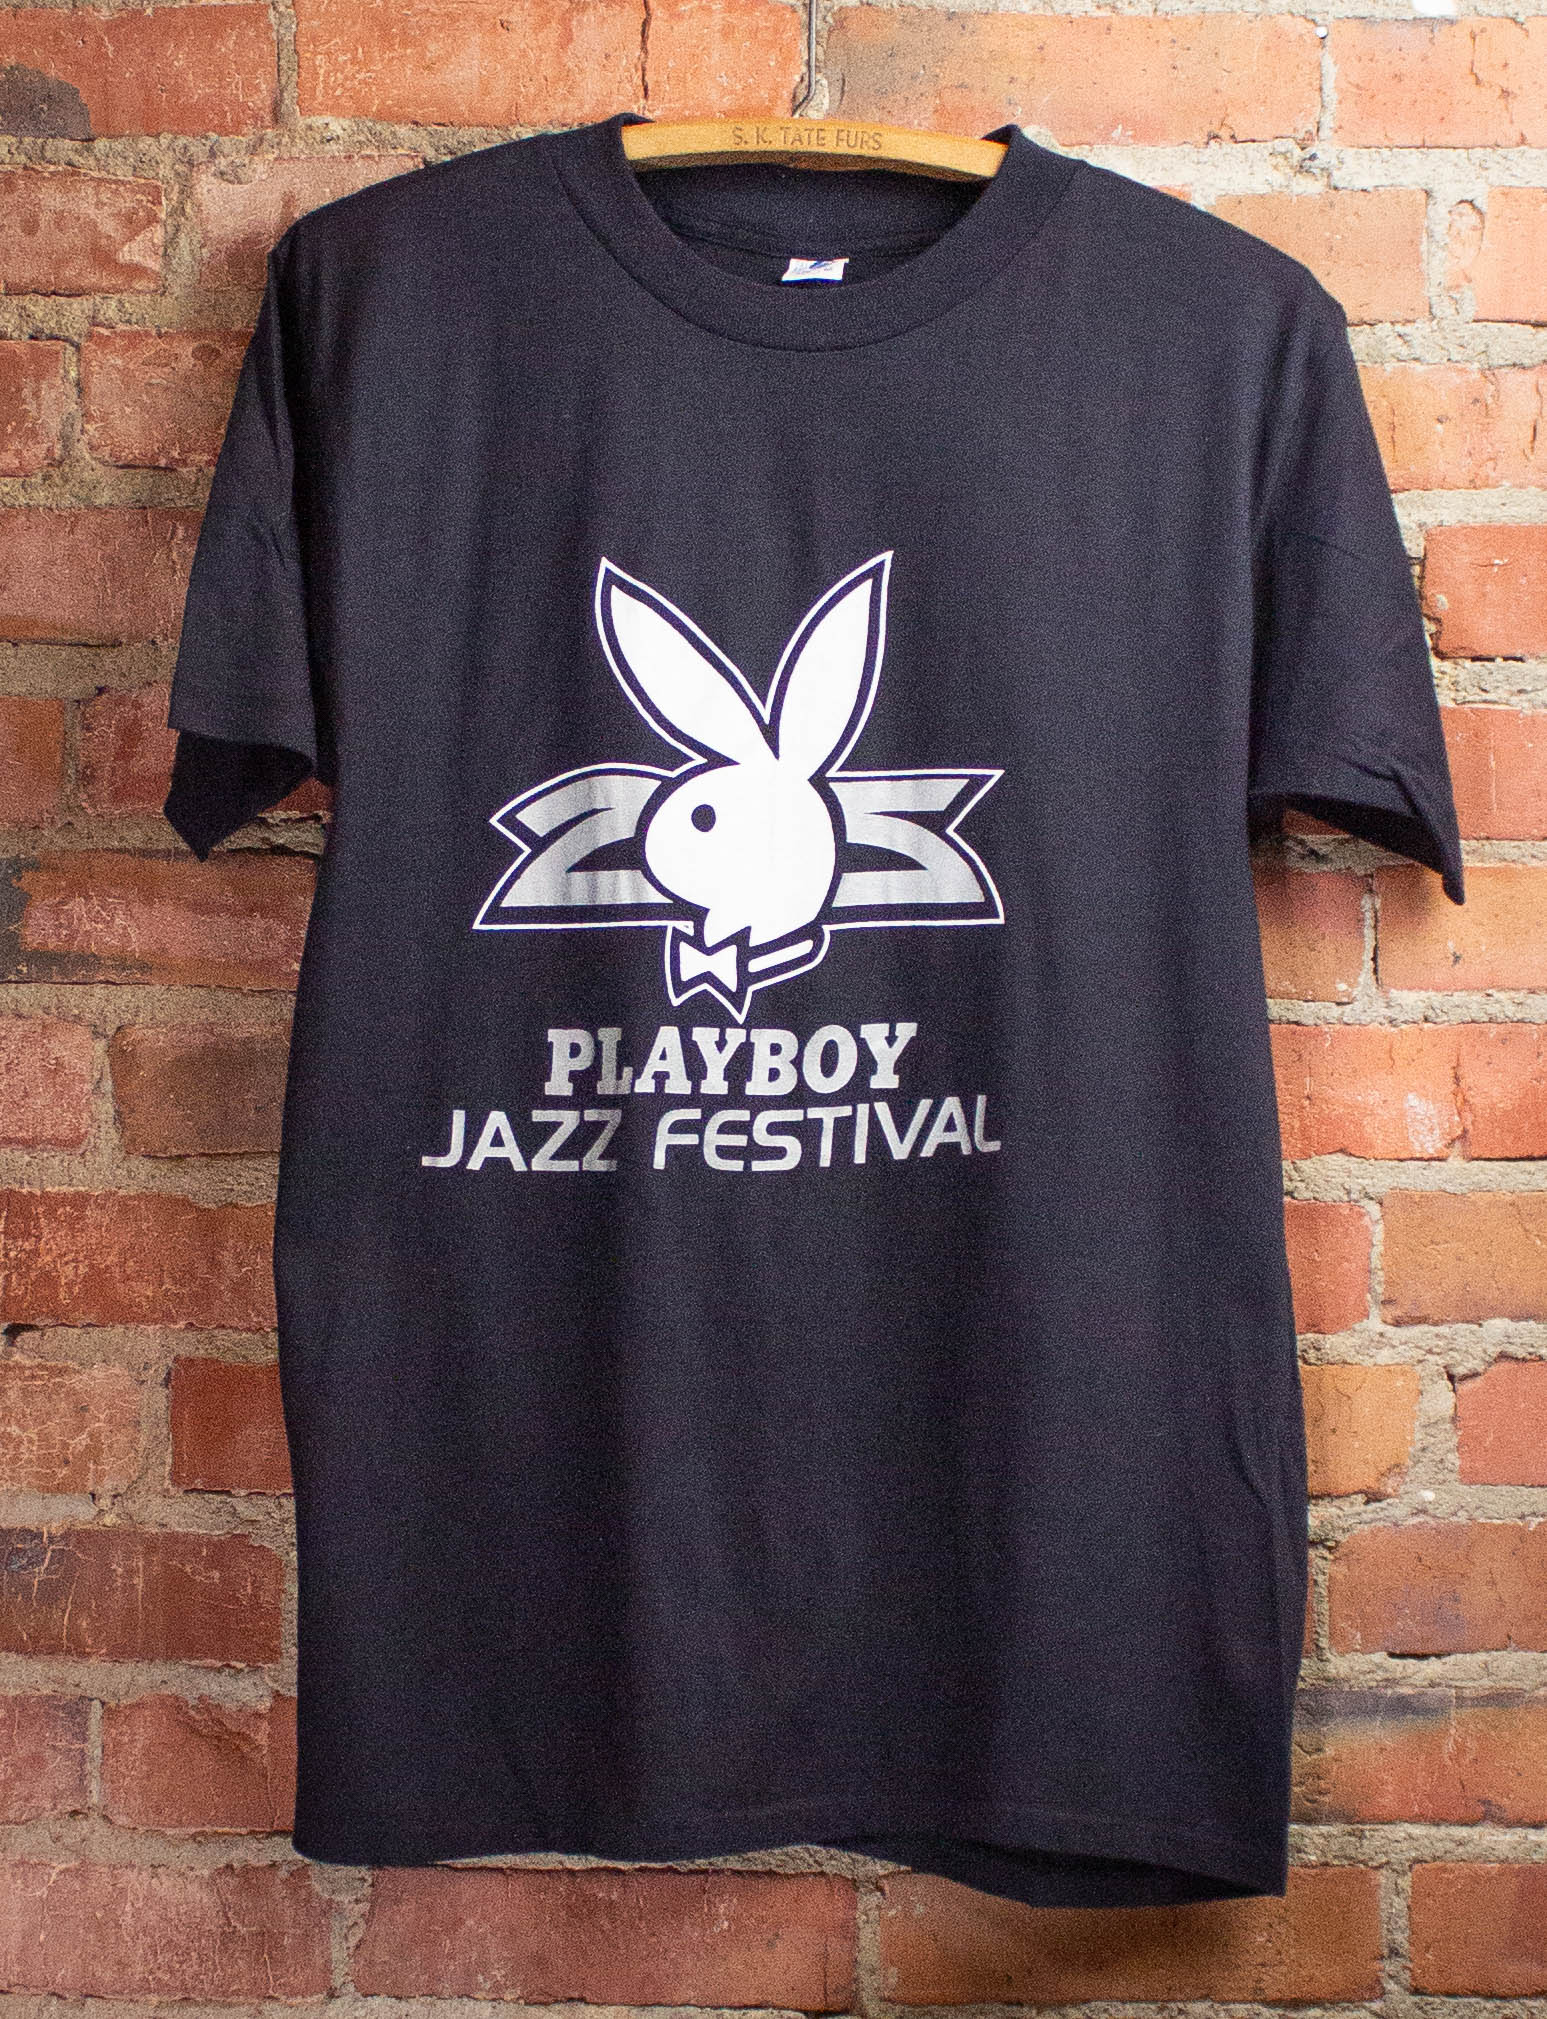 Vintage Jazzercise Star Confetti T-Shirt